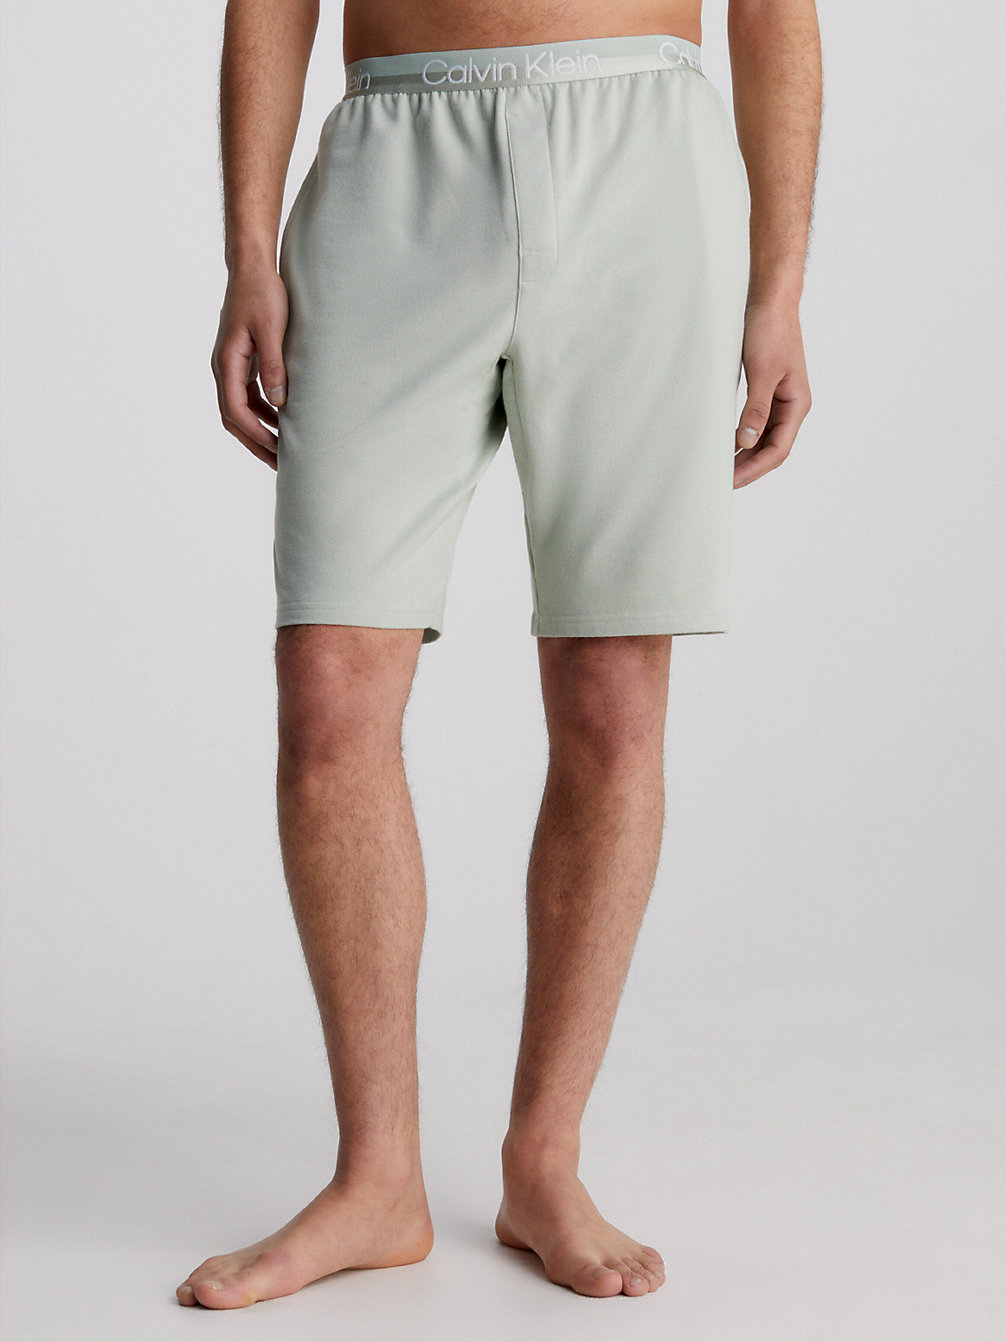 FROSTED FERN Lounge Shorts - Modern Structure undefined men Calvin Klein